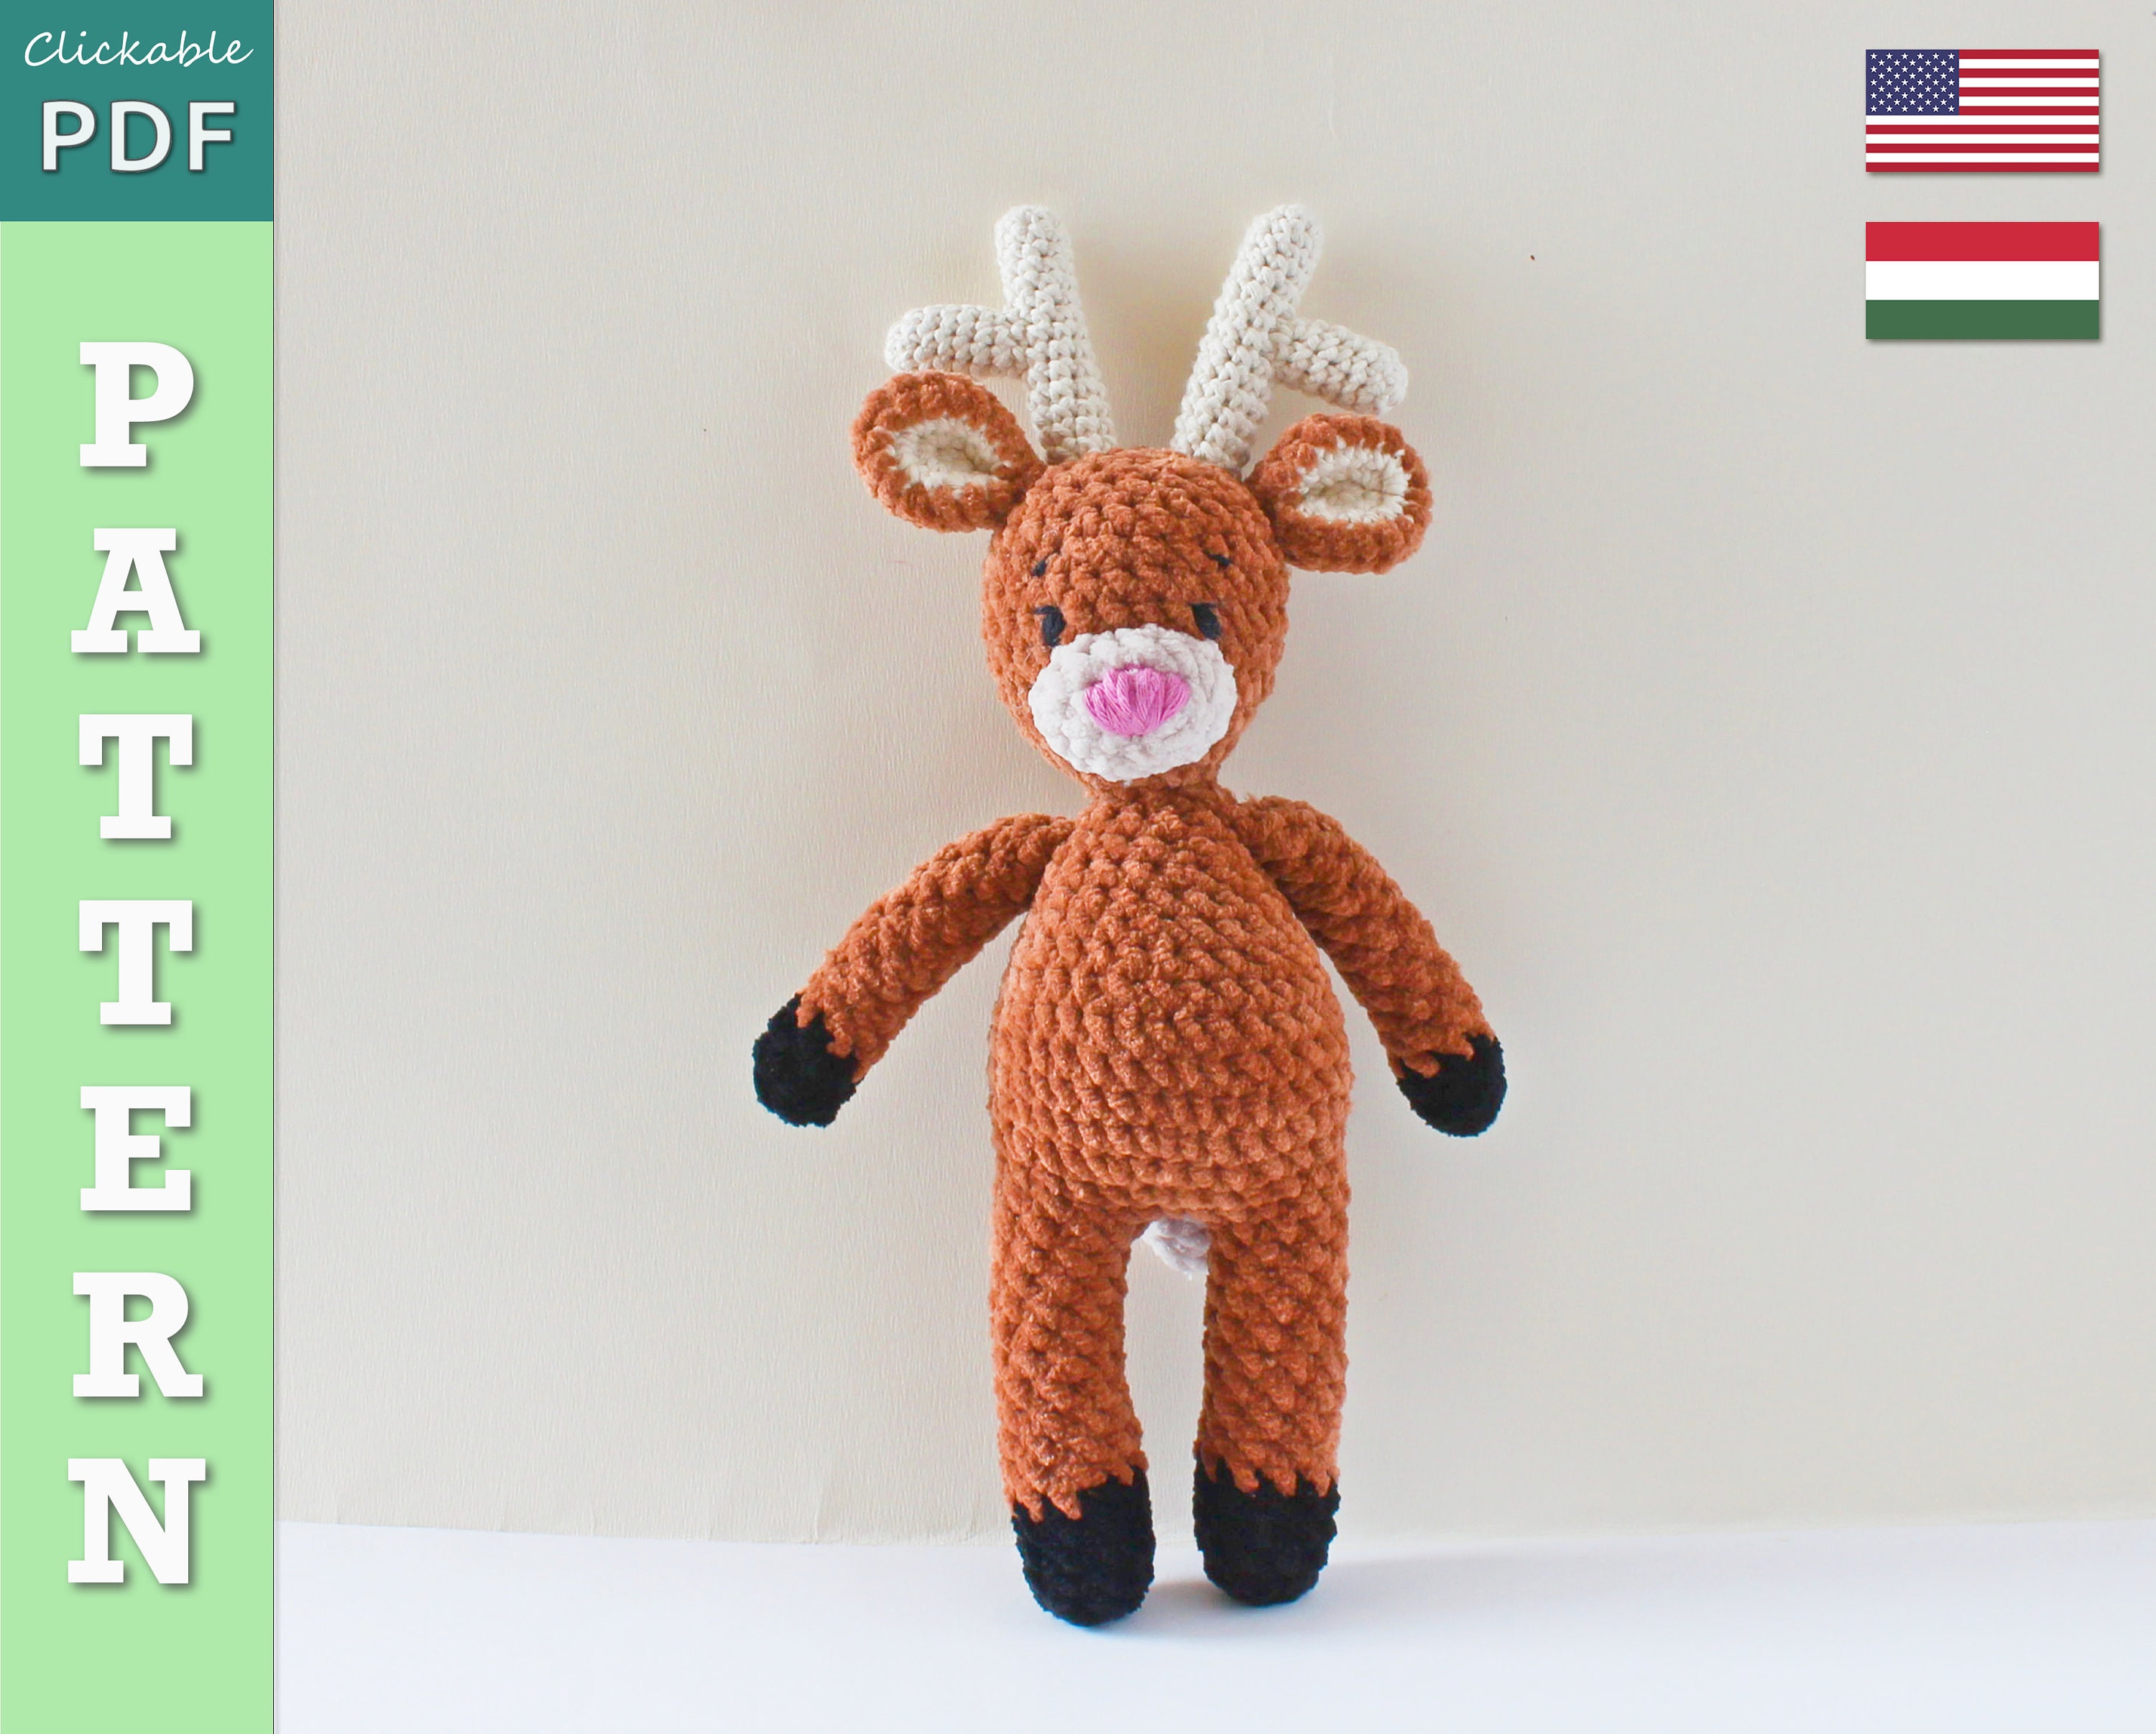 DIY Christmas Toy Crochet Kit for Beginners With Yarn Amigurumi Deer Plush Crochet  Kit Christmas in July 